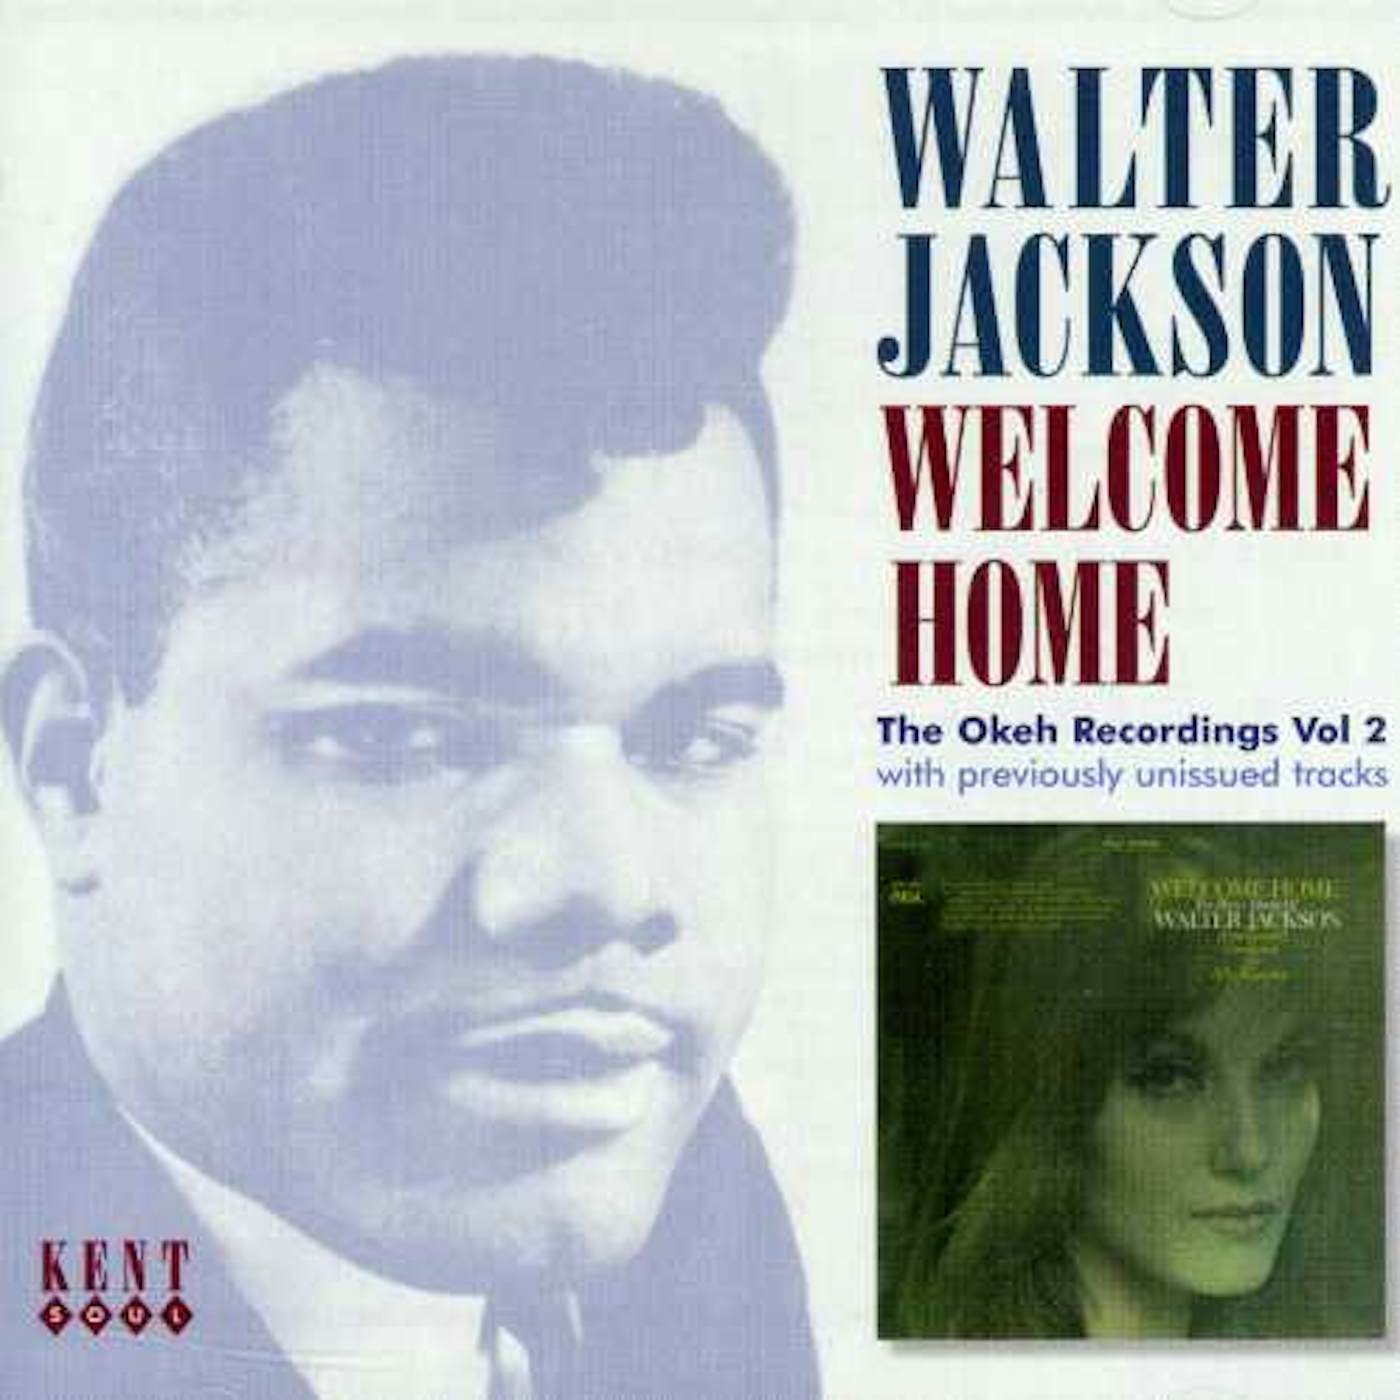 Walter Jackson WELCOME HOME: THE OKEH RECORDINGS 2 CD